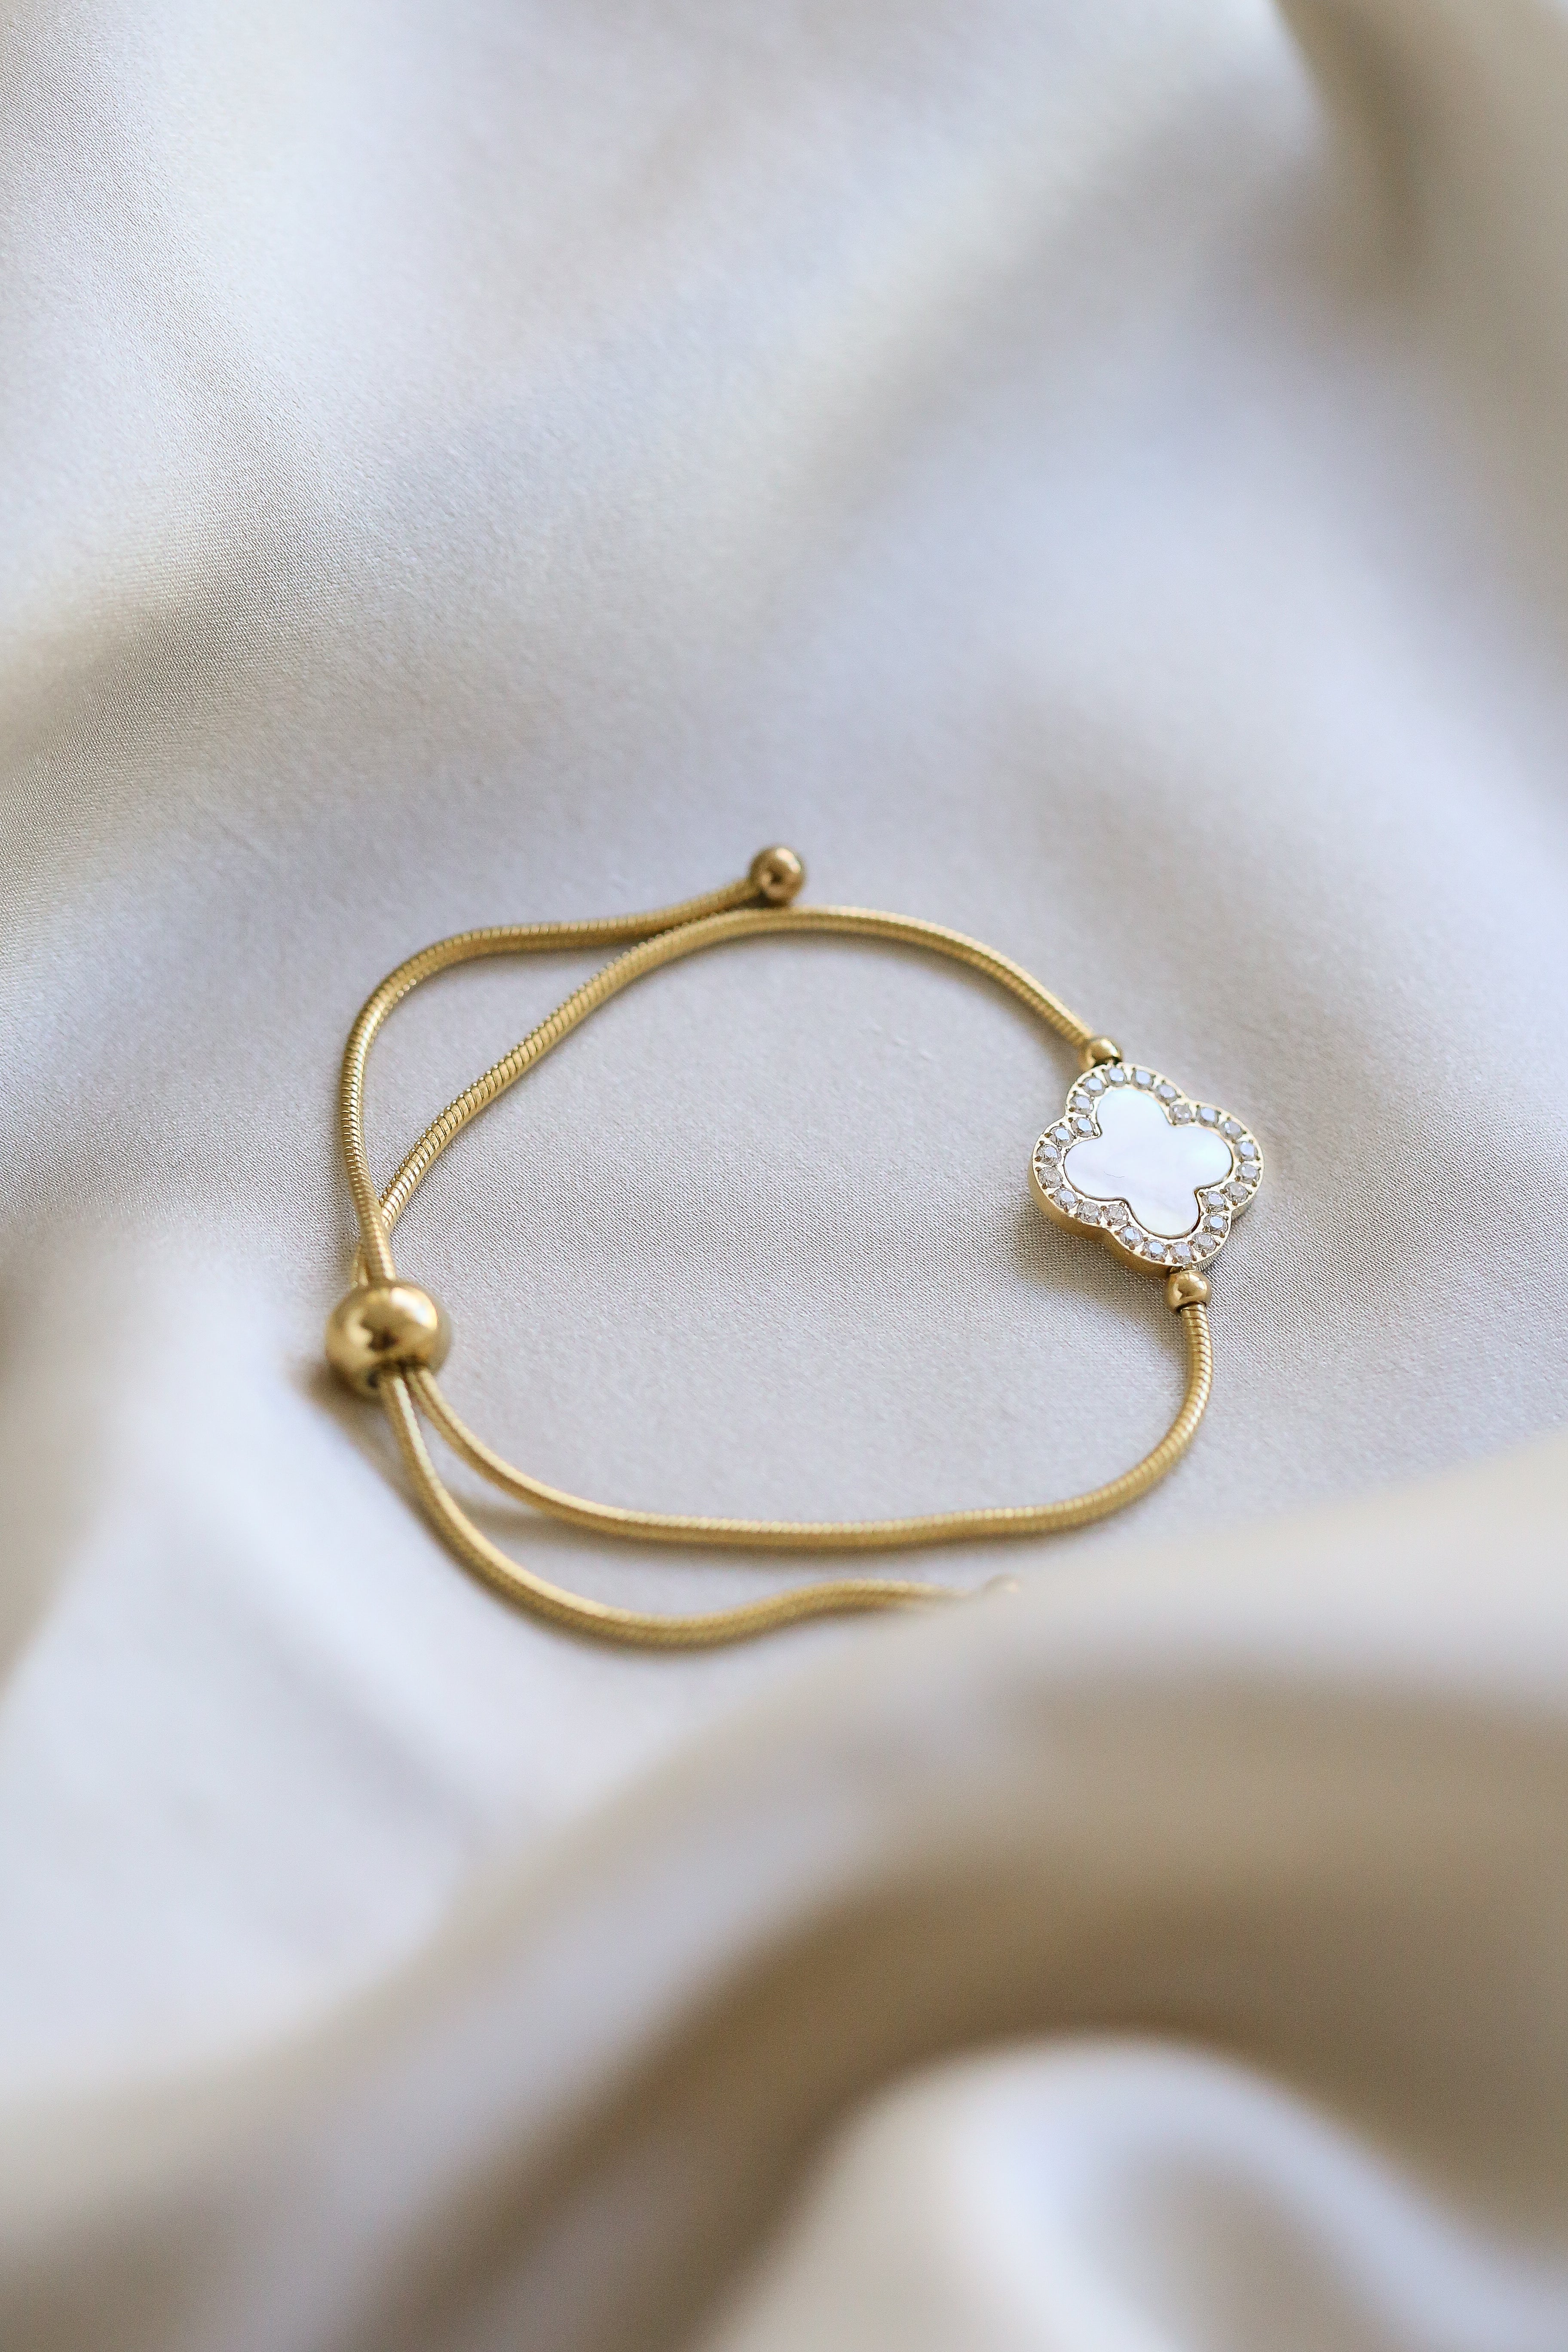 Boutique Minimaliste Jewelry on Instagram: “Clover bracelet